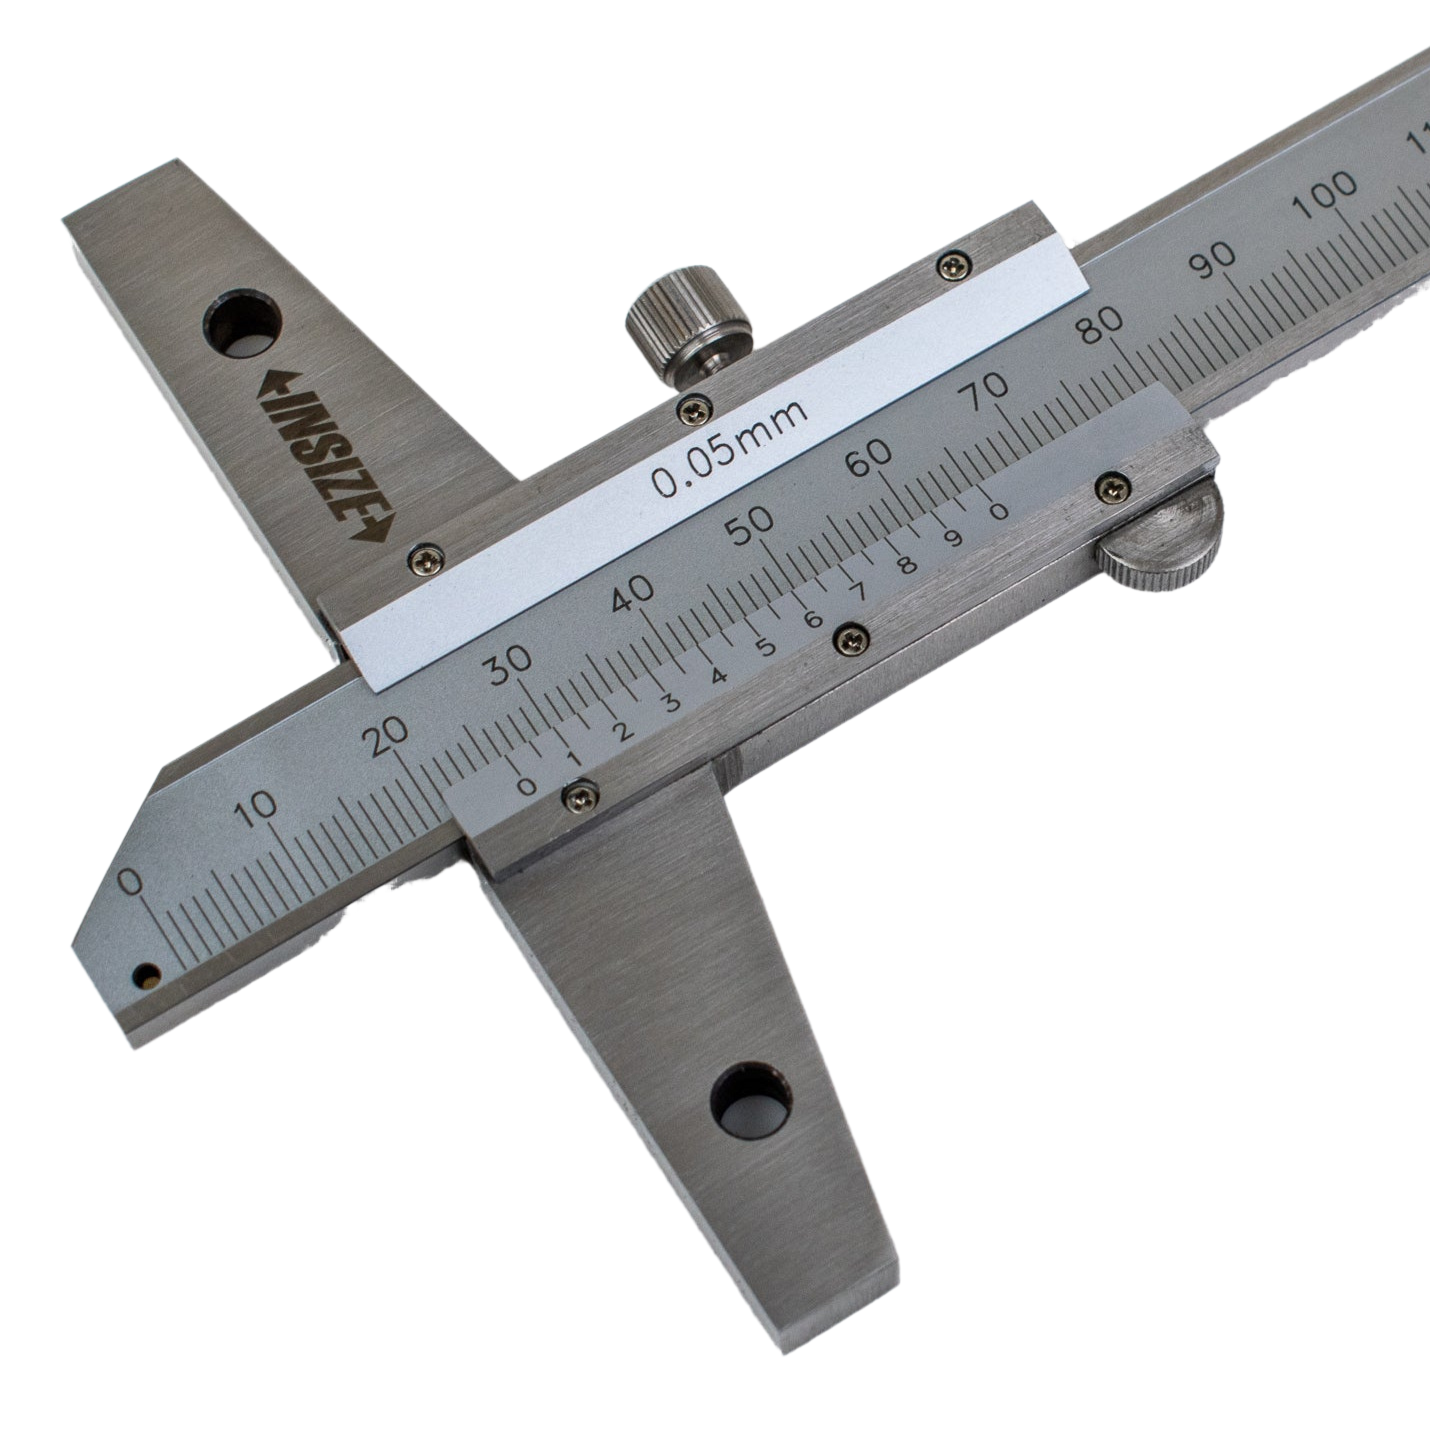 Insize Vernier Depth Gauge 0-150mm Range Series 1247-150